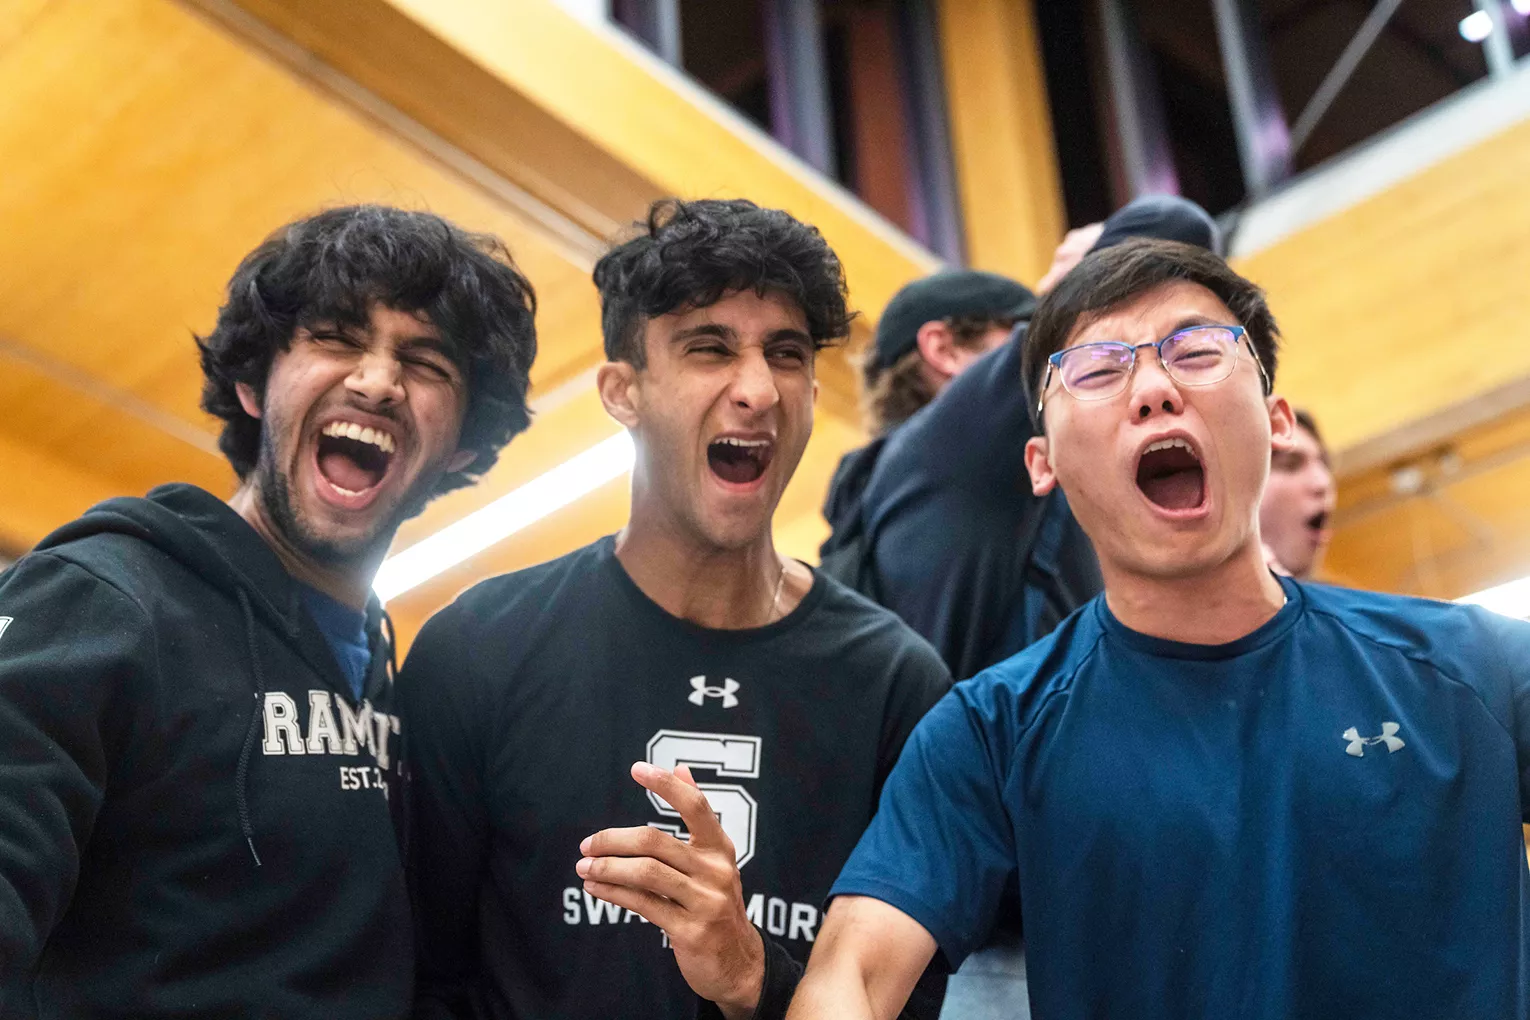 Students take part in Primal Scream in dining center